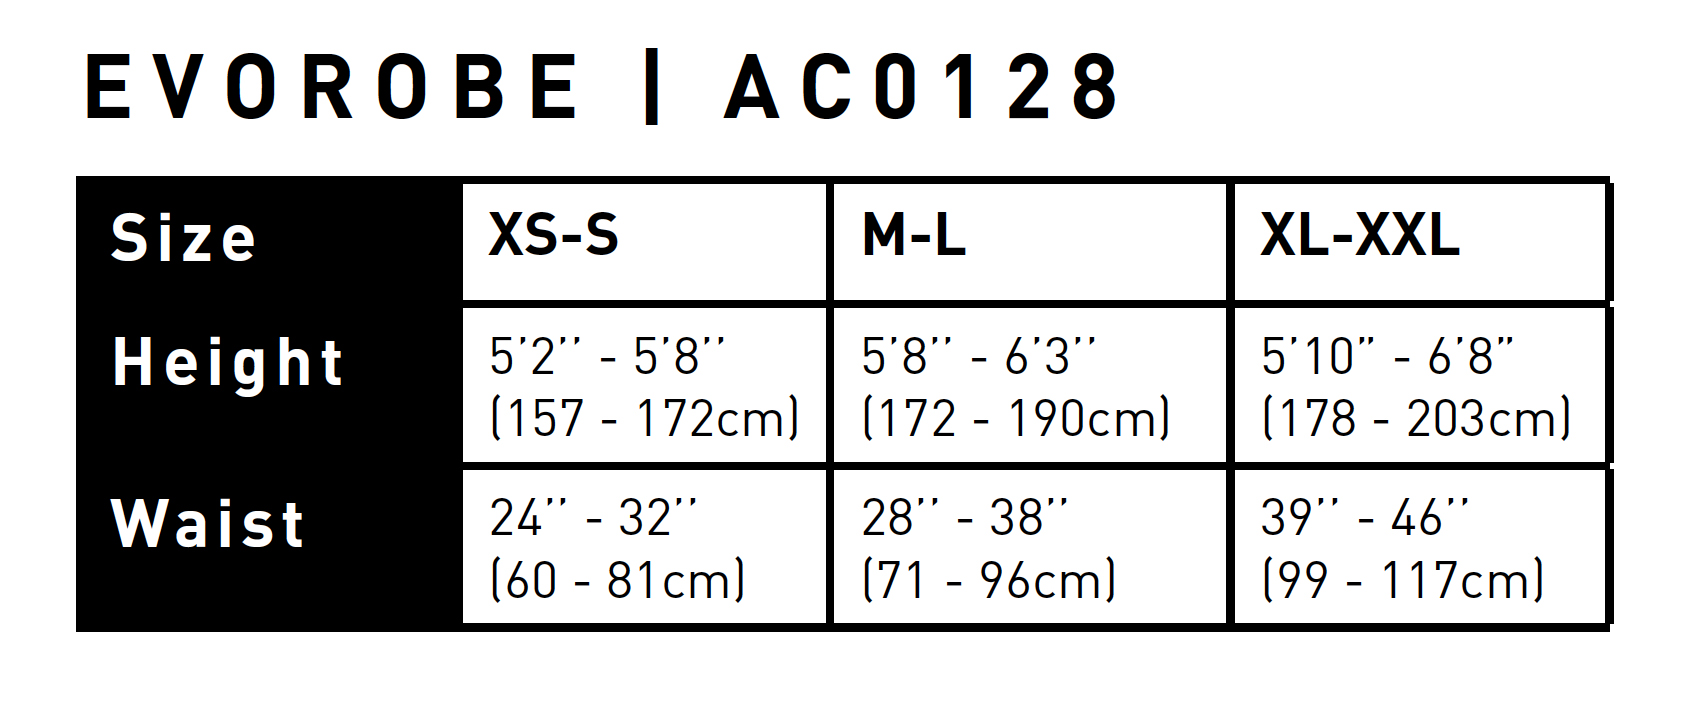 Gul EvoRobe Adult Size 2021 0 Grfico do tamanho